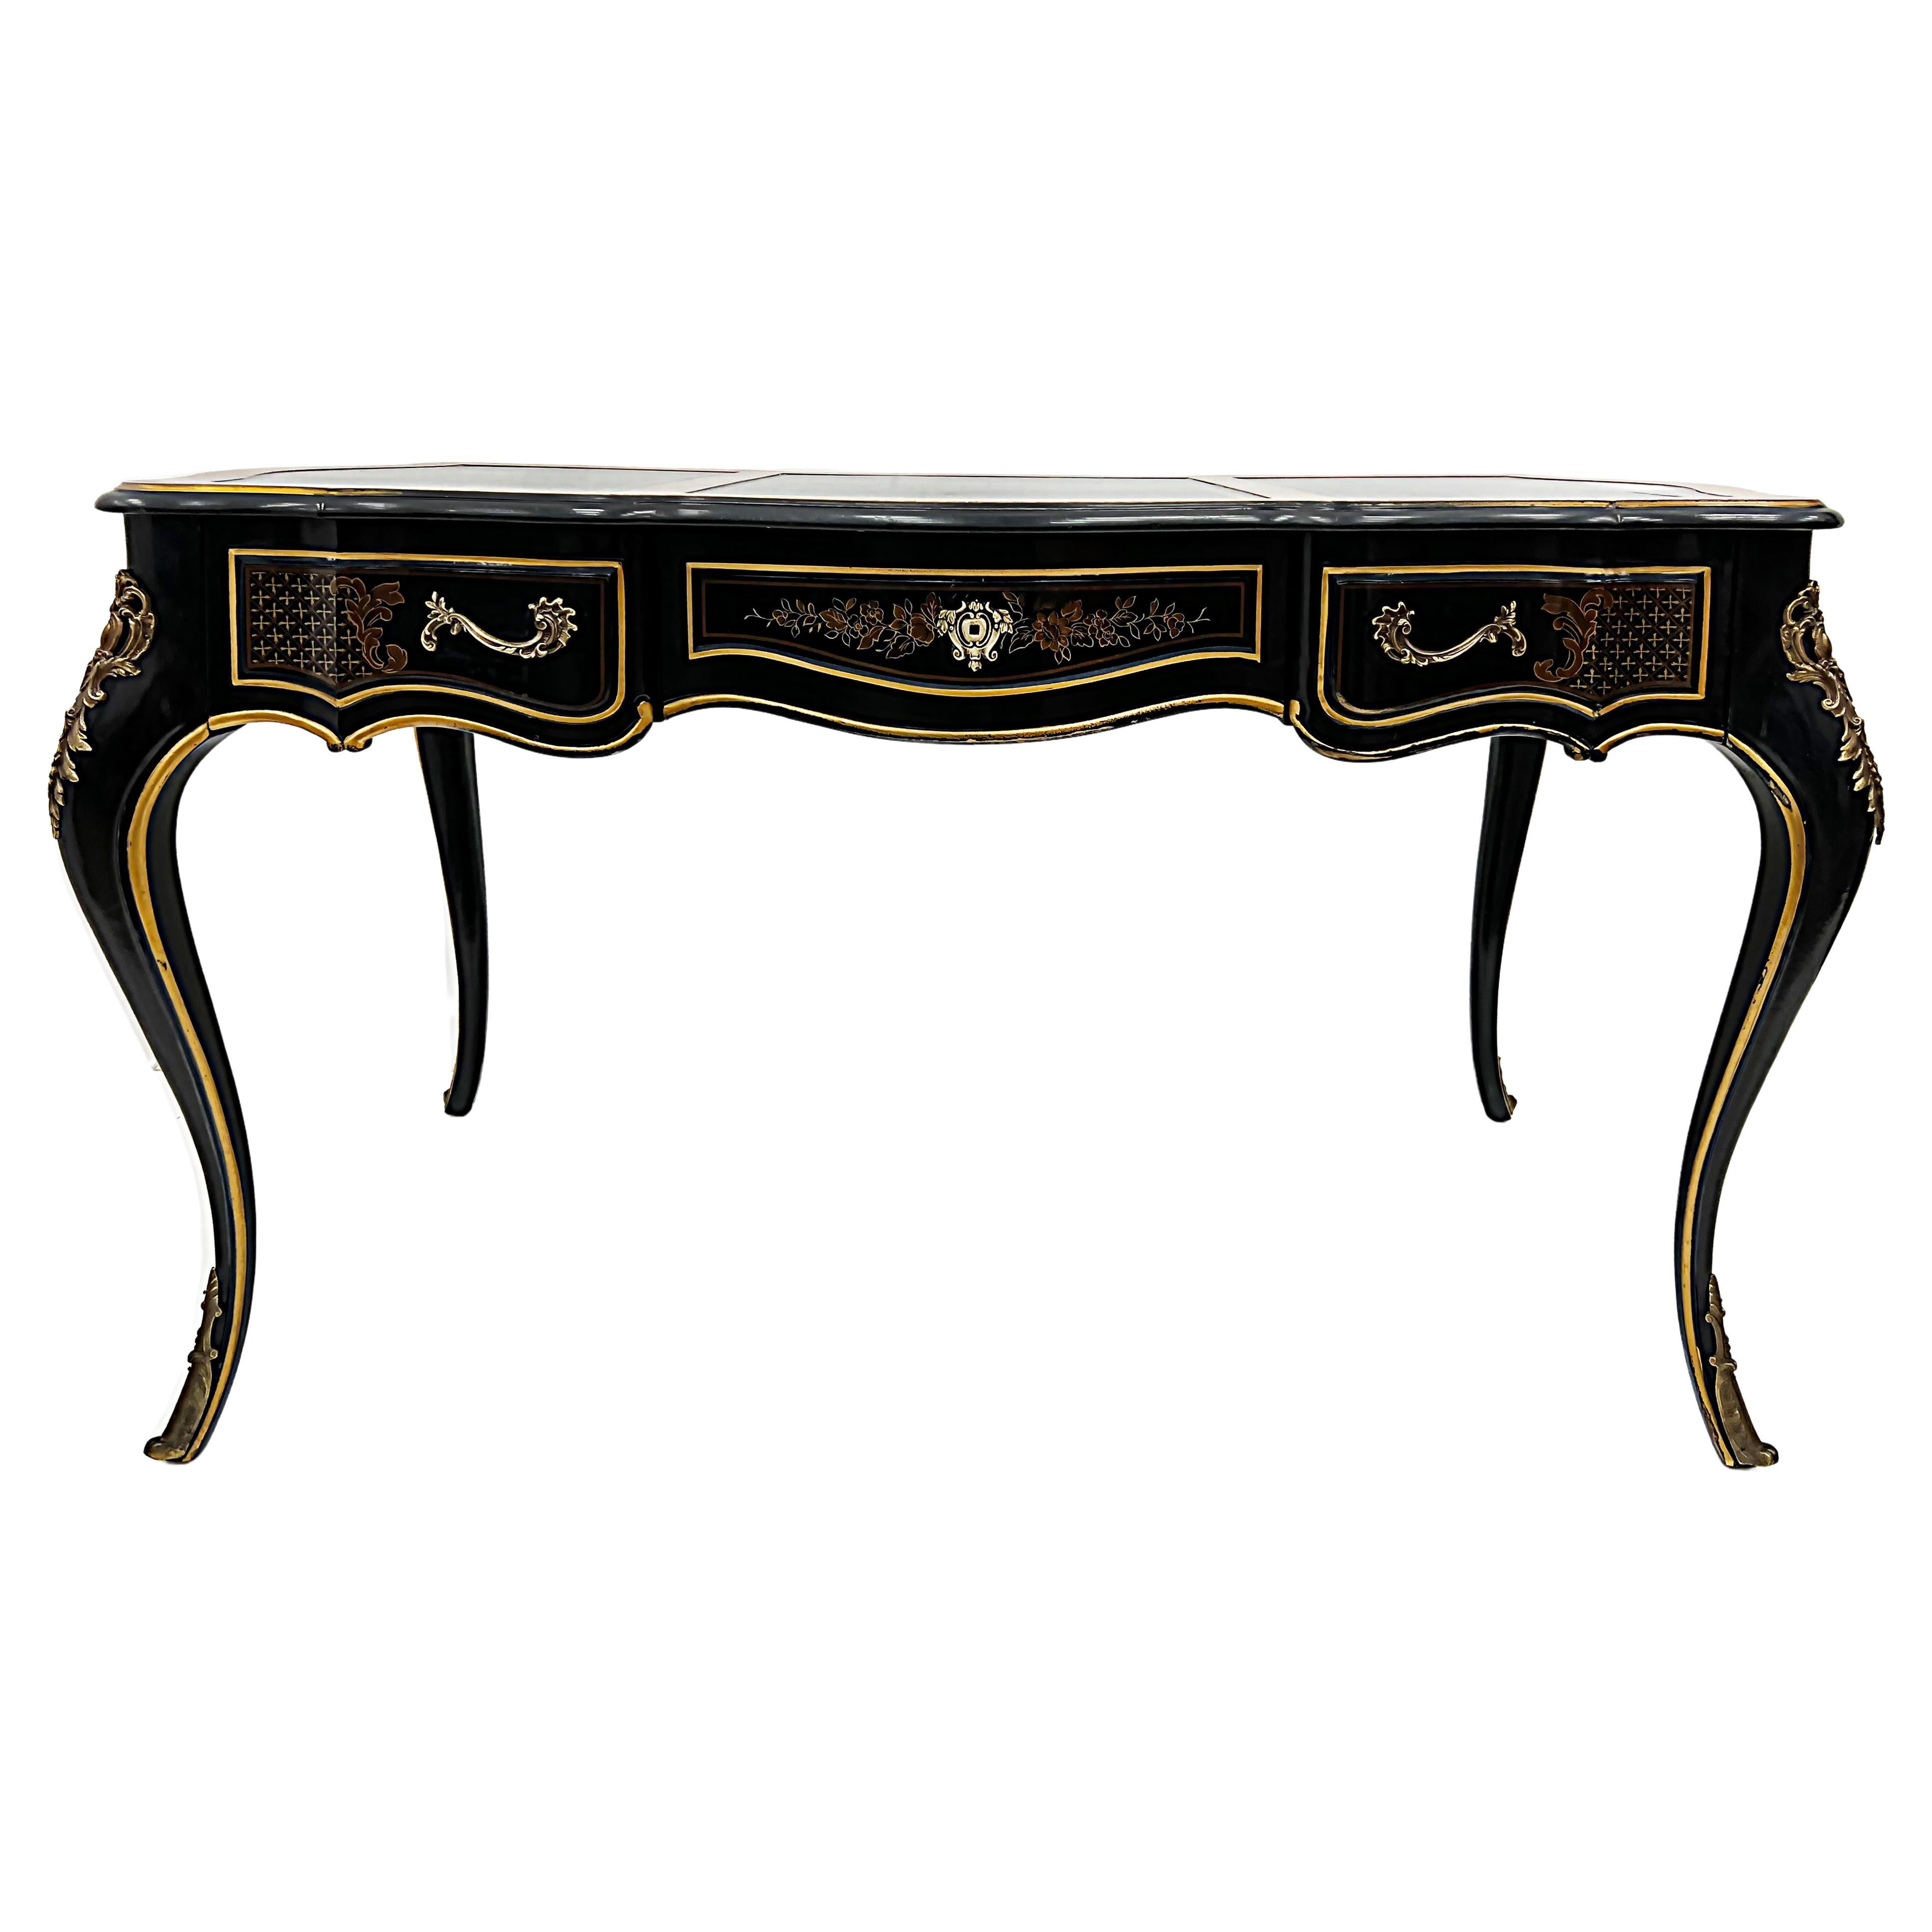 Vintage Drexel Leather Top Desk, Manner of Louis XV, Brass Mounts